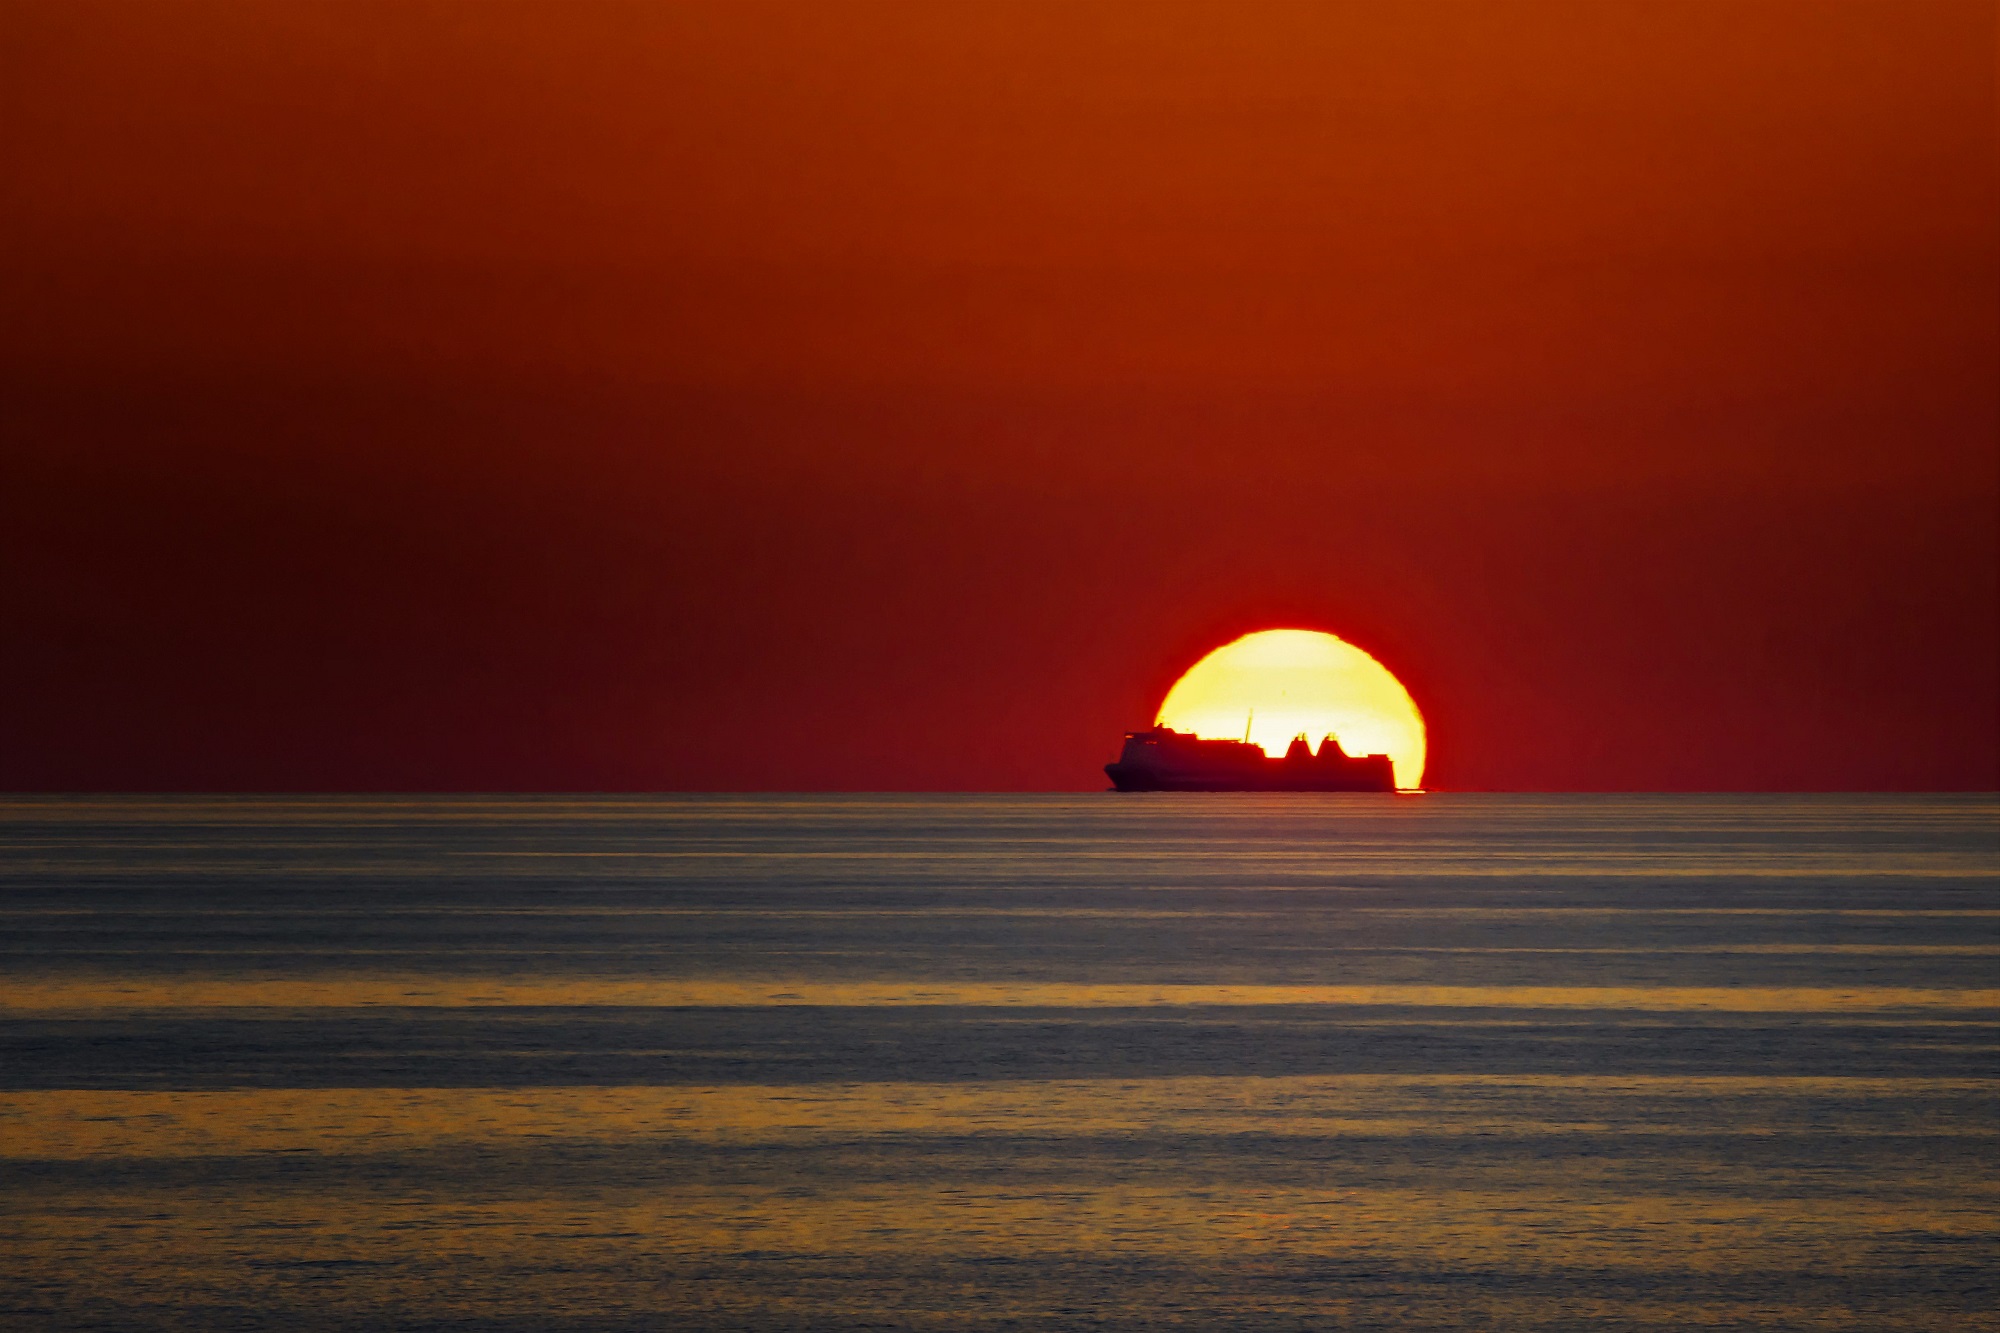 Sunset on the high seas...